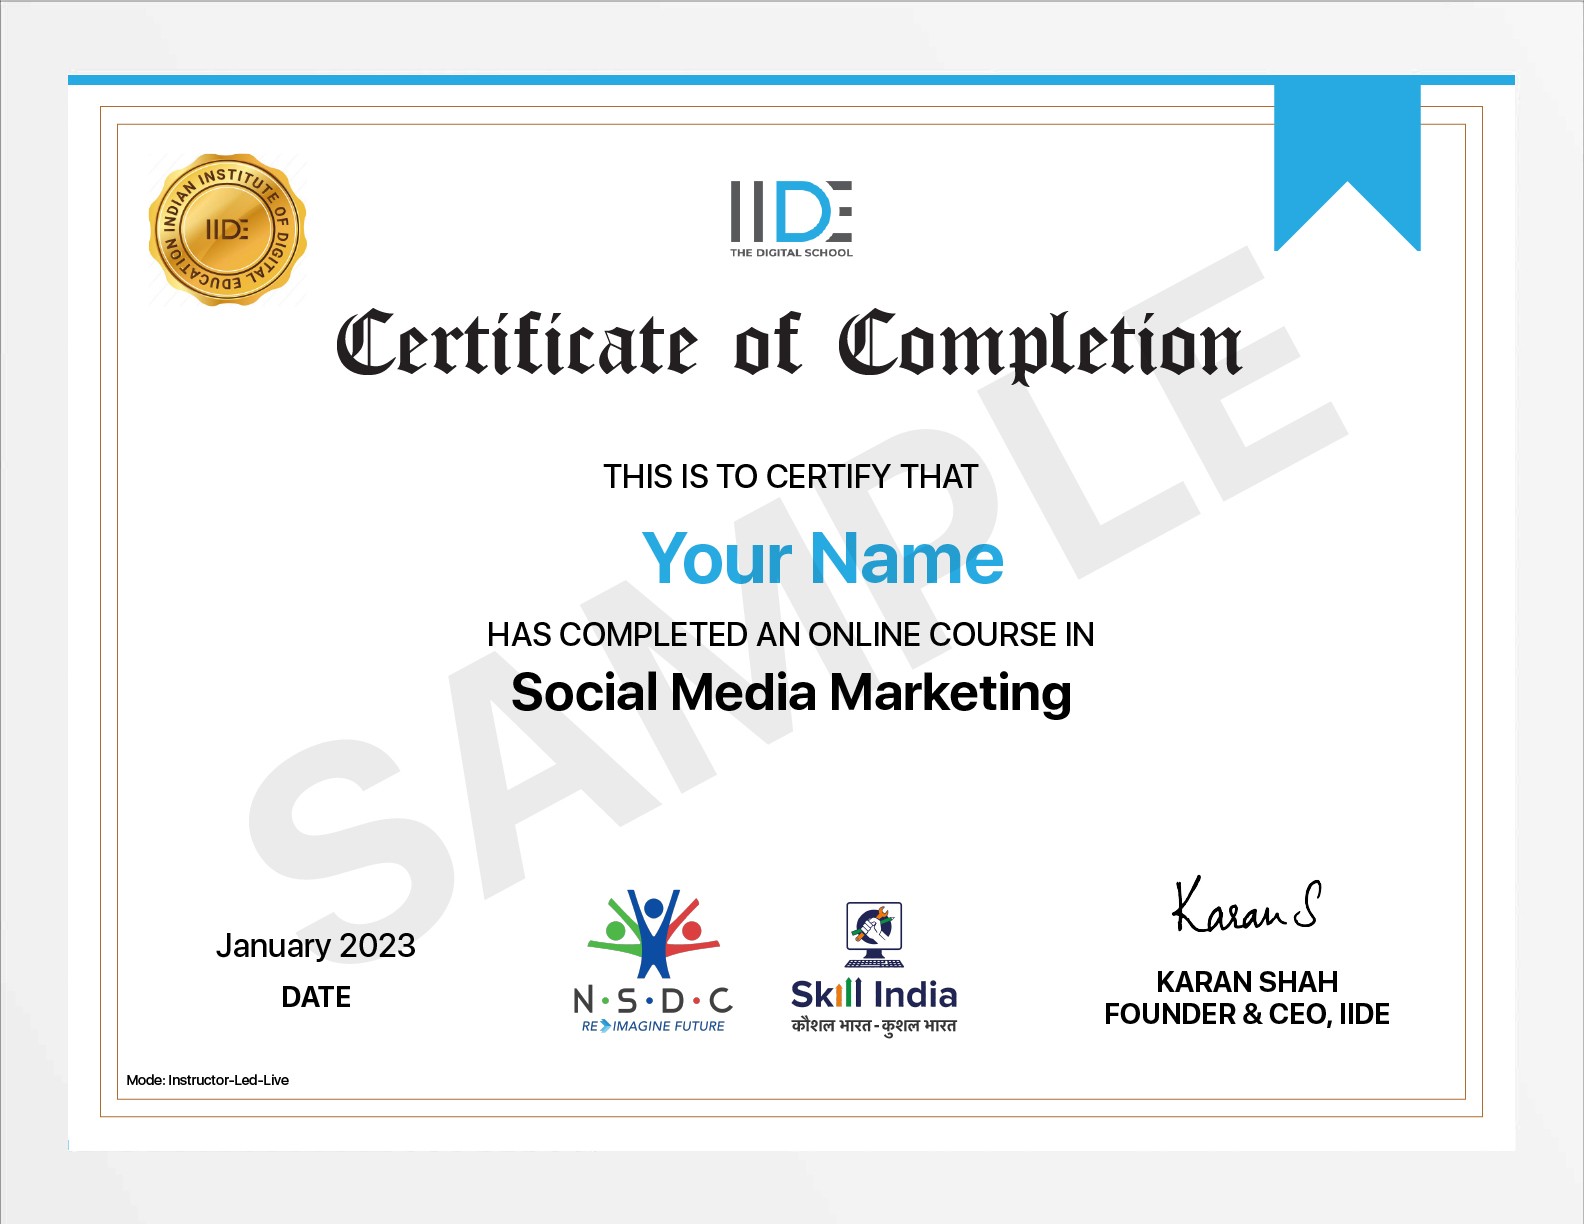 Social Media Marketing Course Online - Certificate